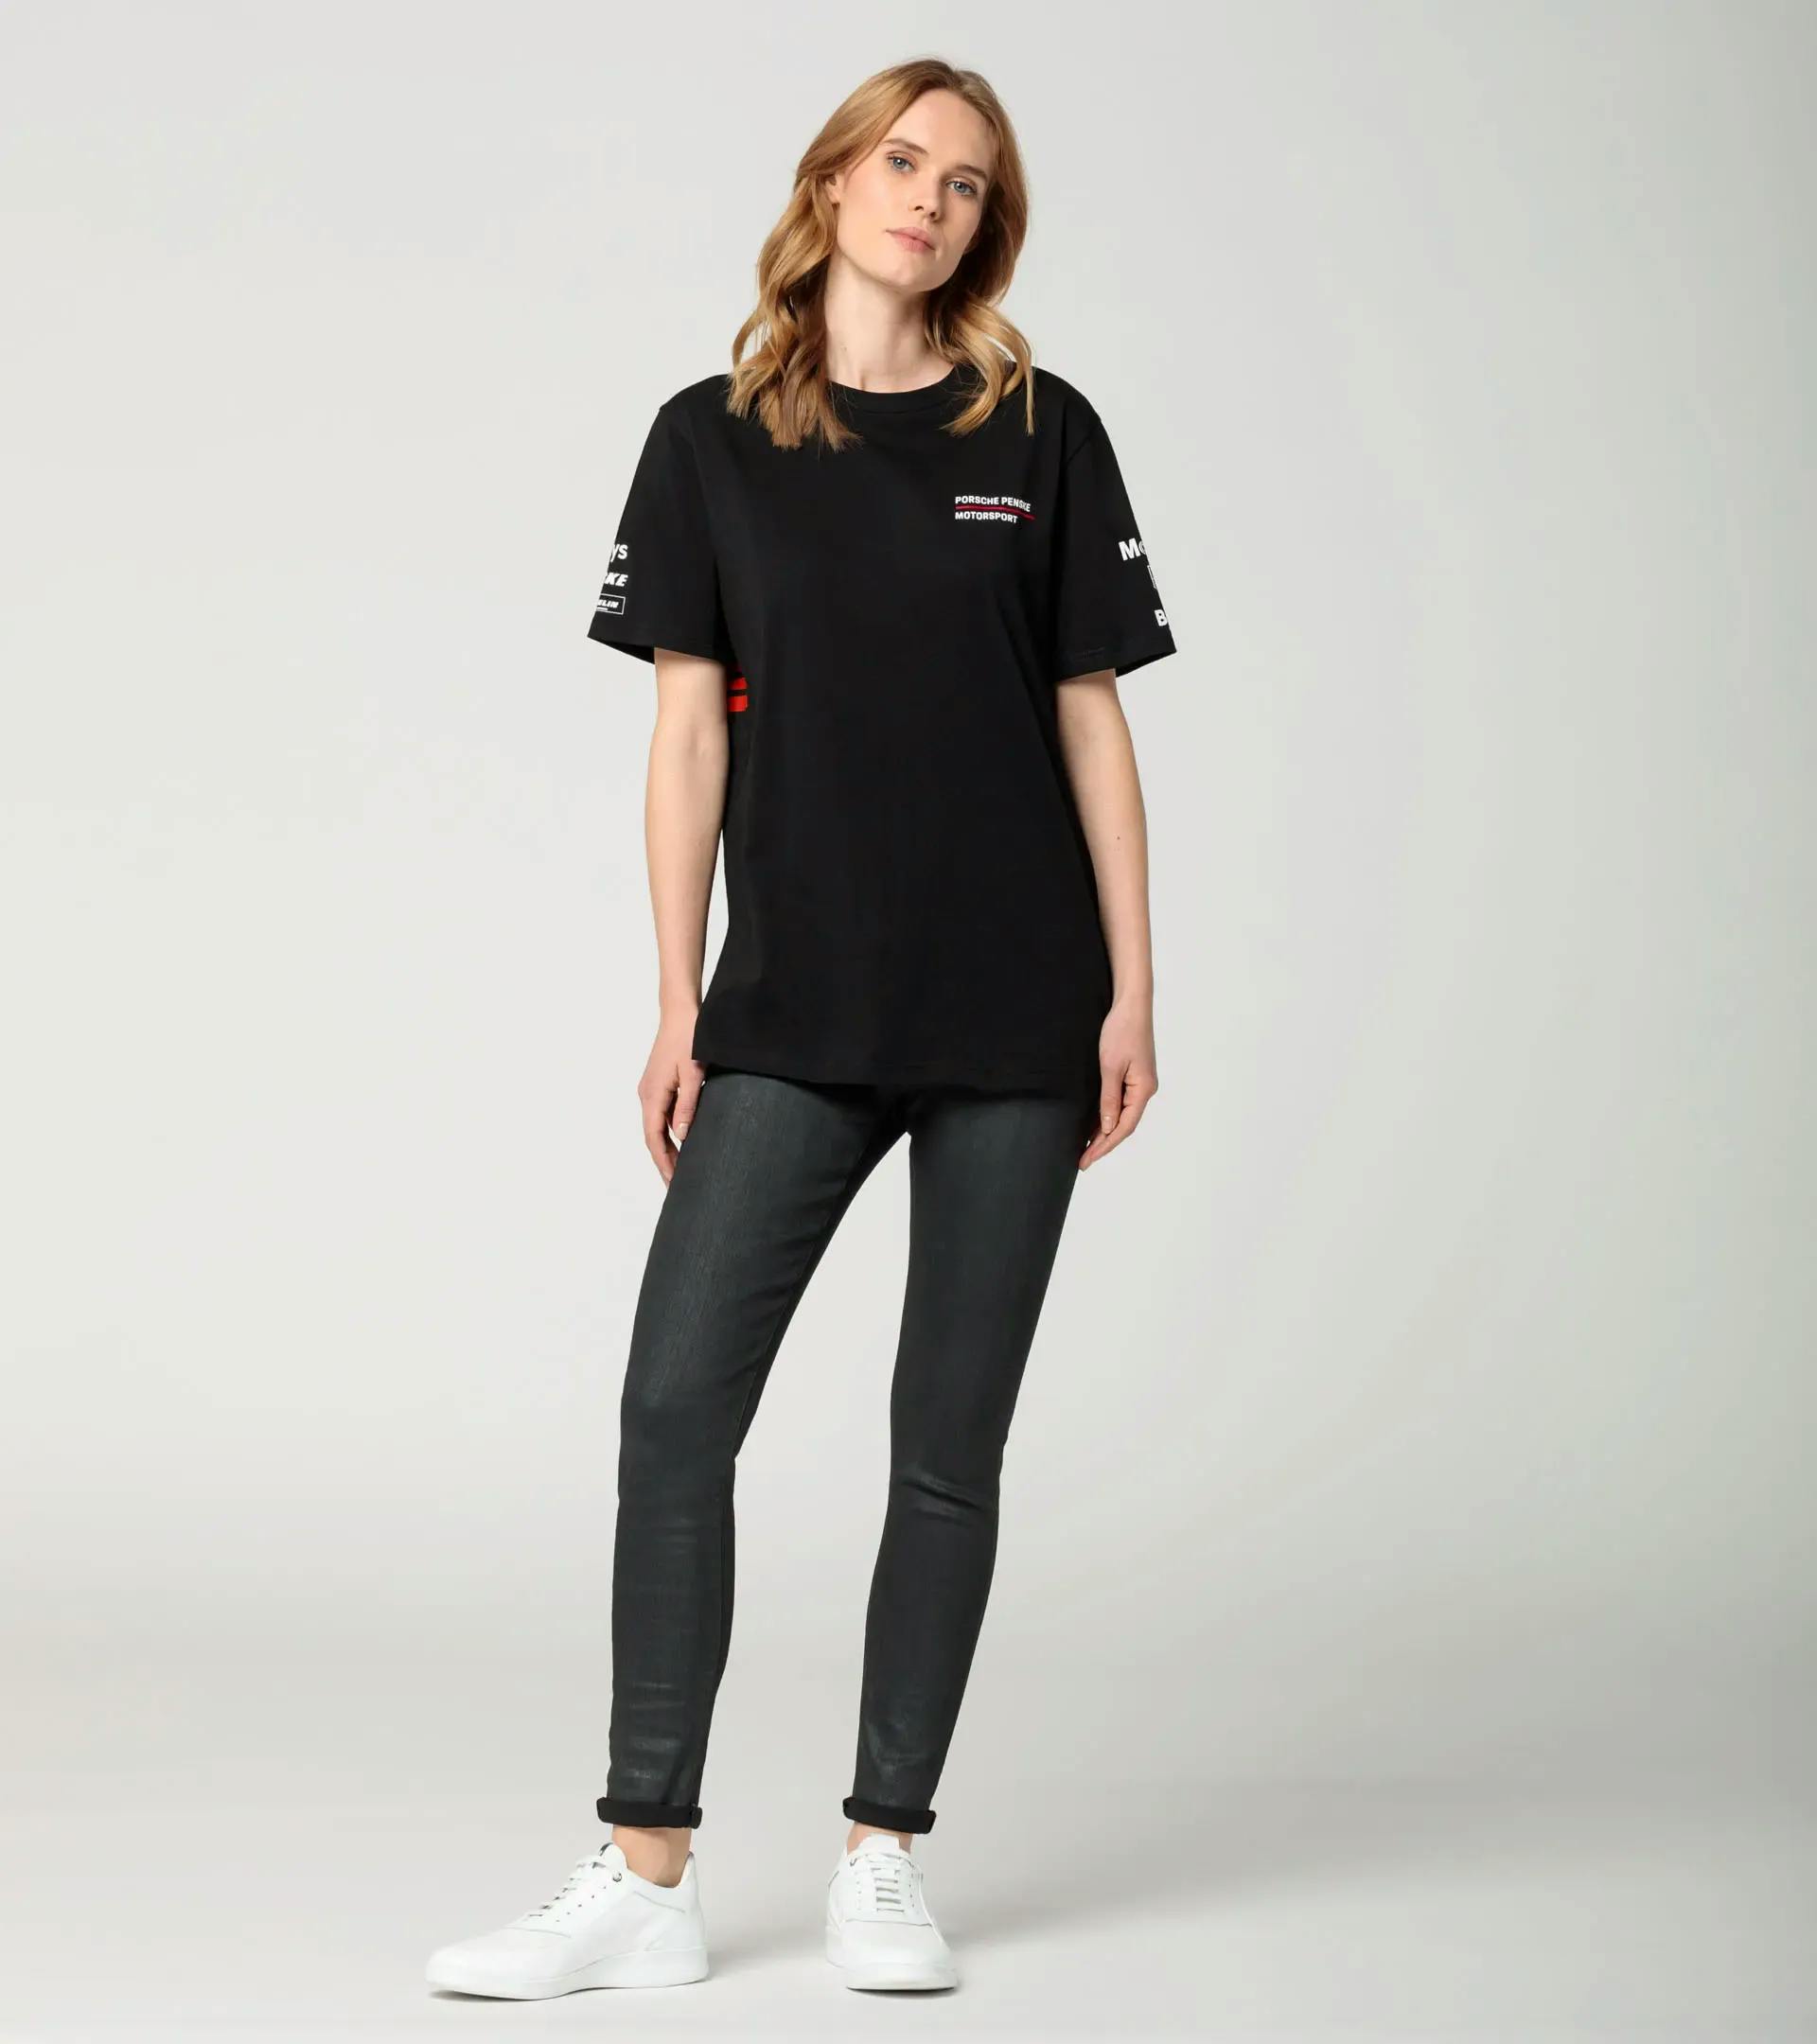 Unisex T-Shirt – Porsche Penske Motorsport 7